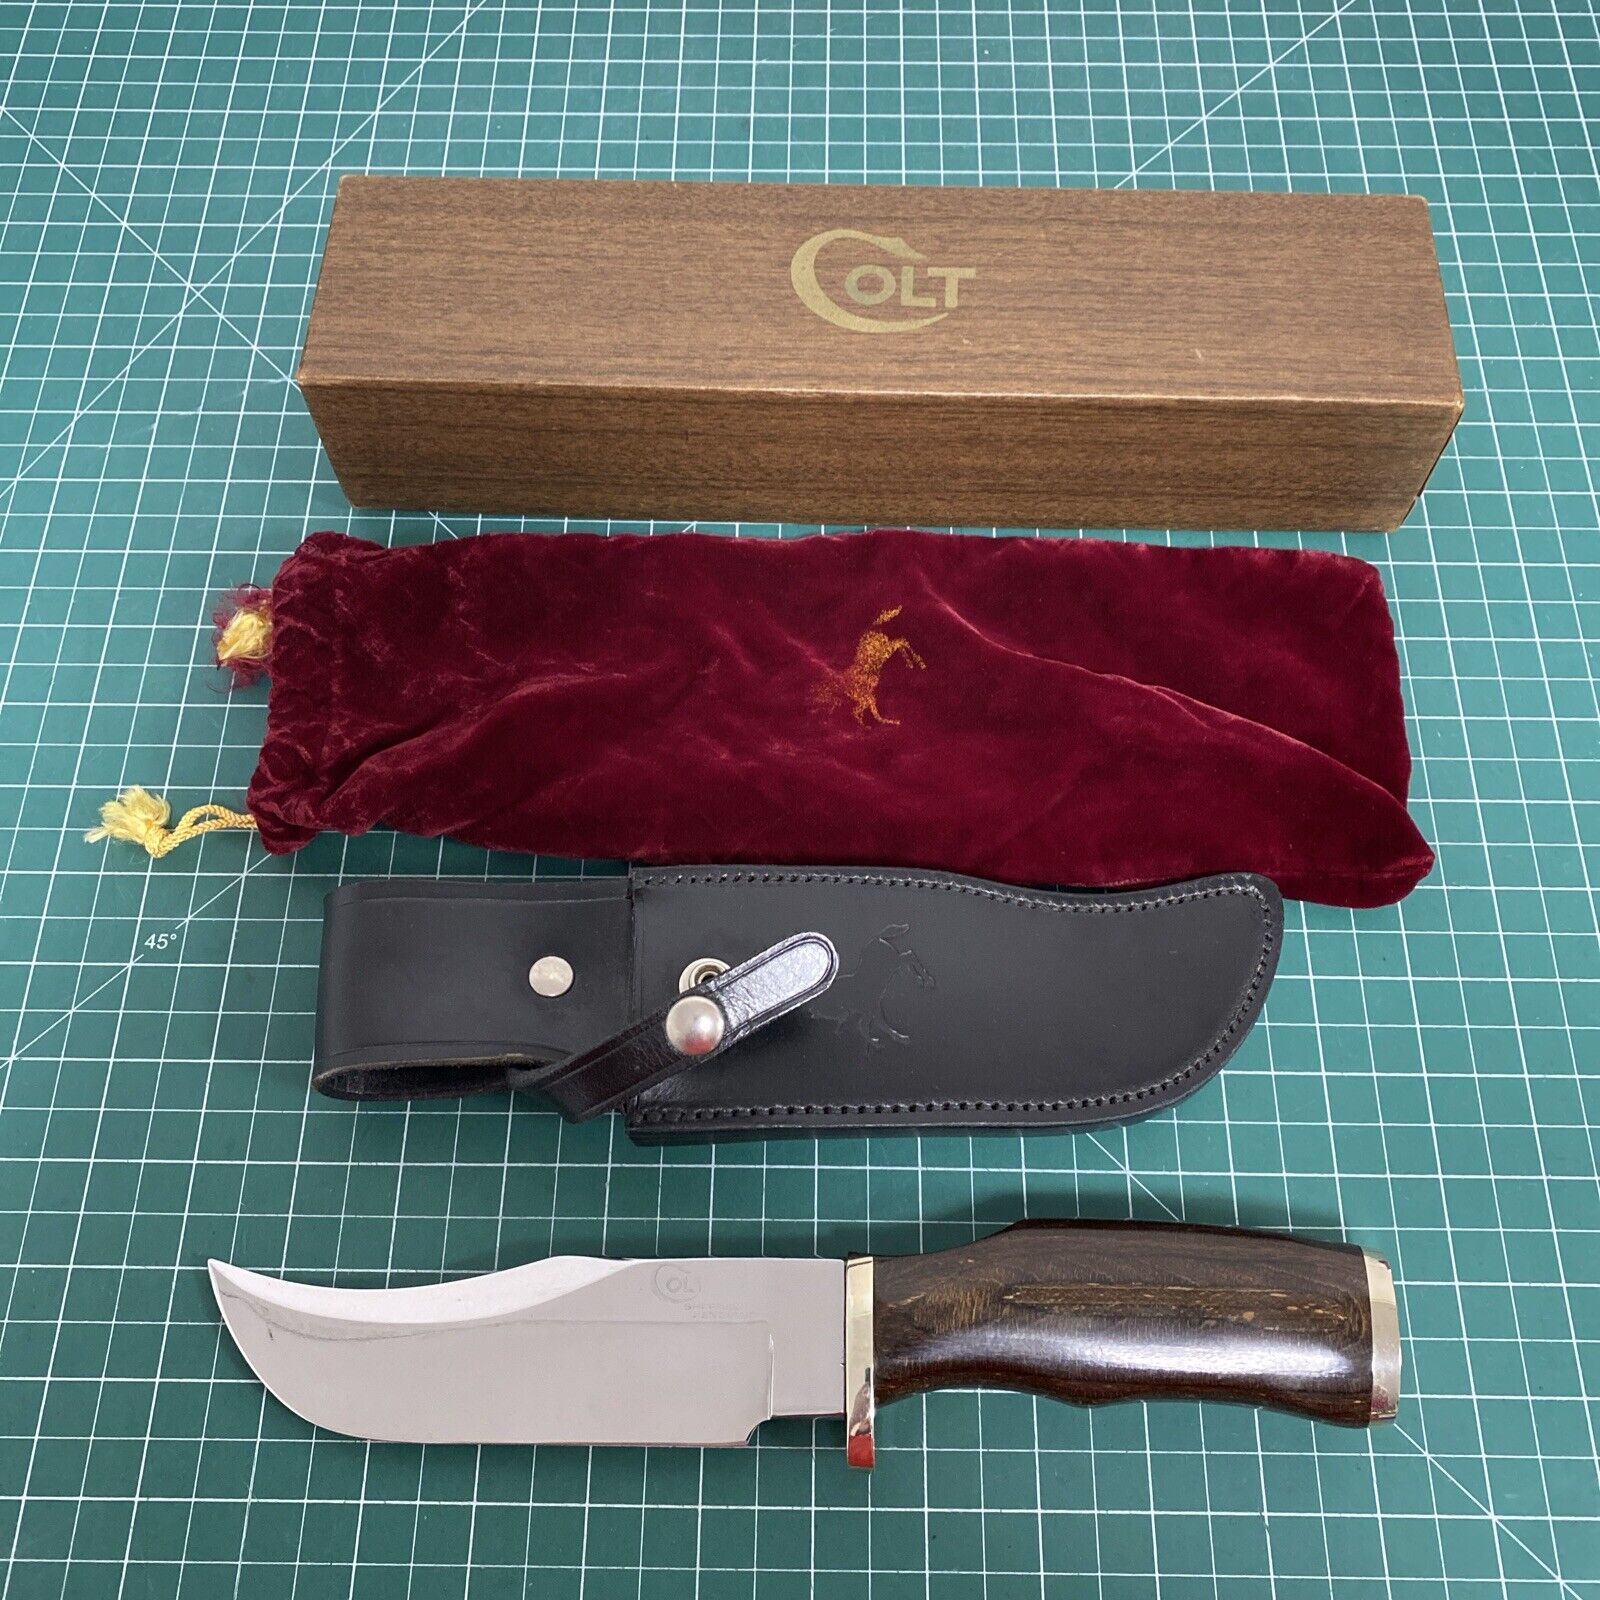 Rare Colt Sheffield Knife U1021 w/ original box, leather sheath & velvet bag A1